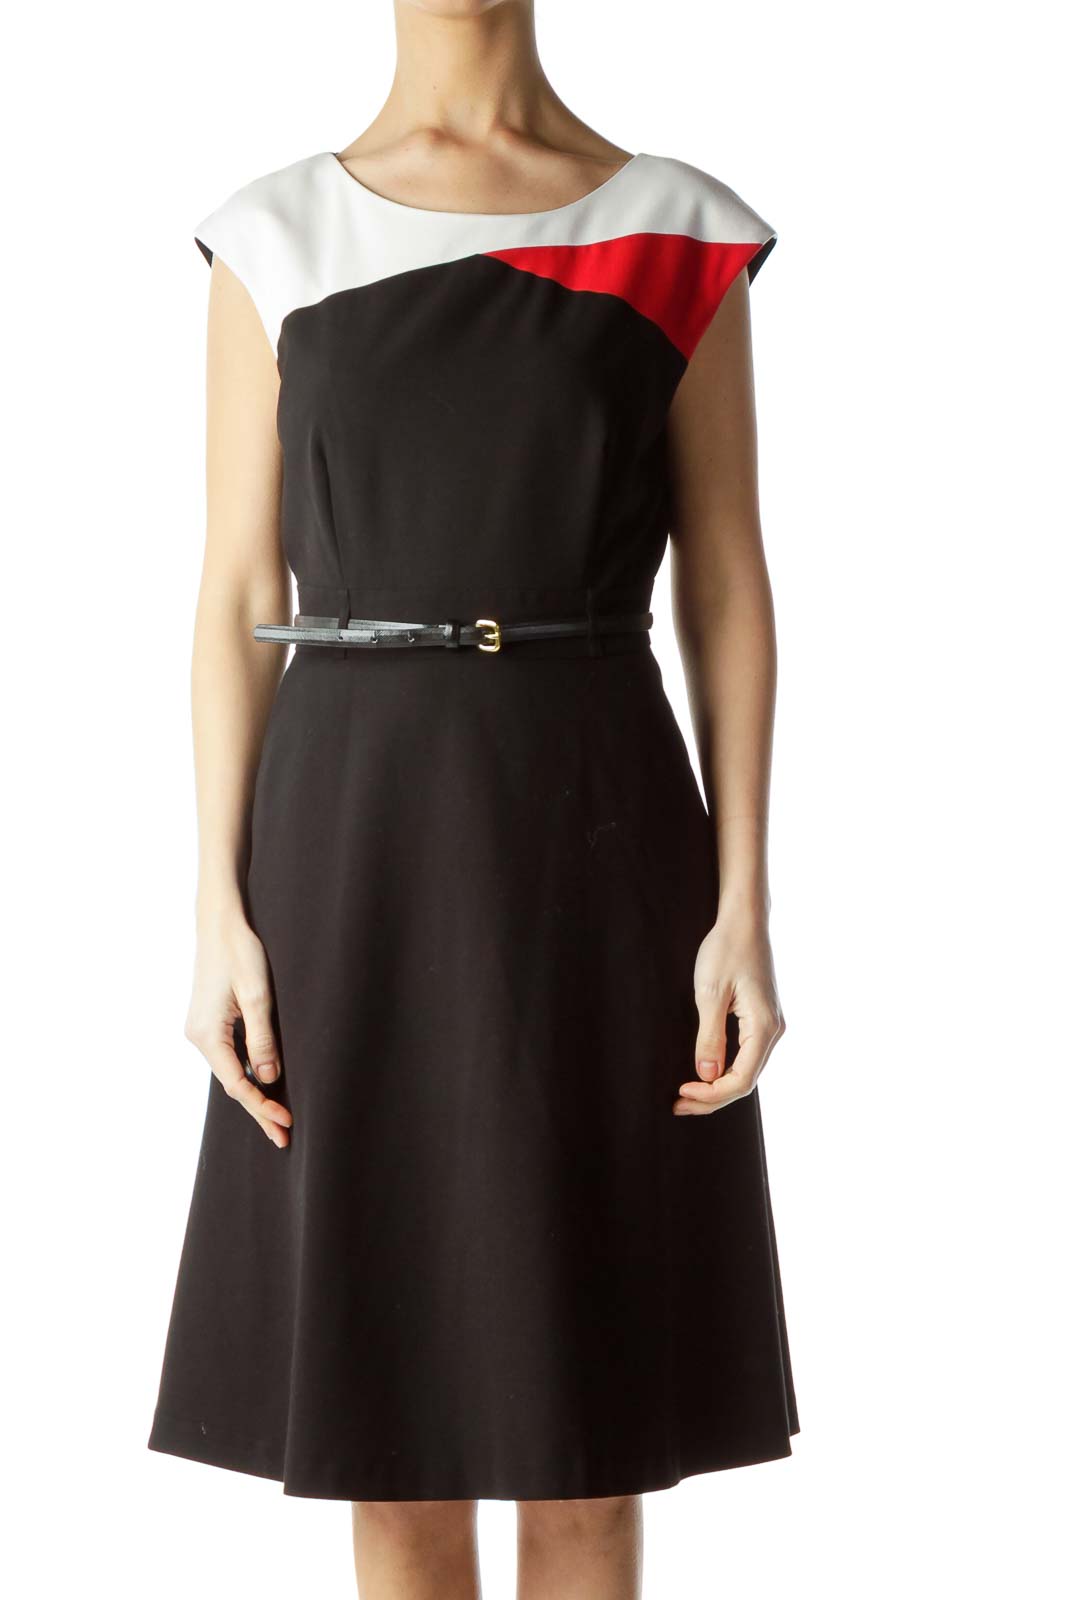 Calvin Klein - Black Red Color Block Belted Work Dress Polyester Rayon  Spandex | SilkRoll